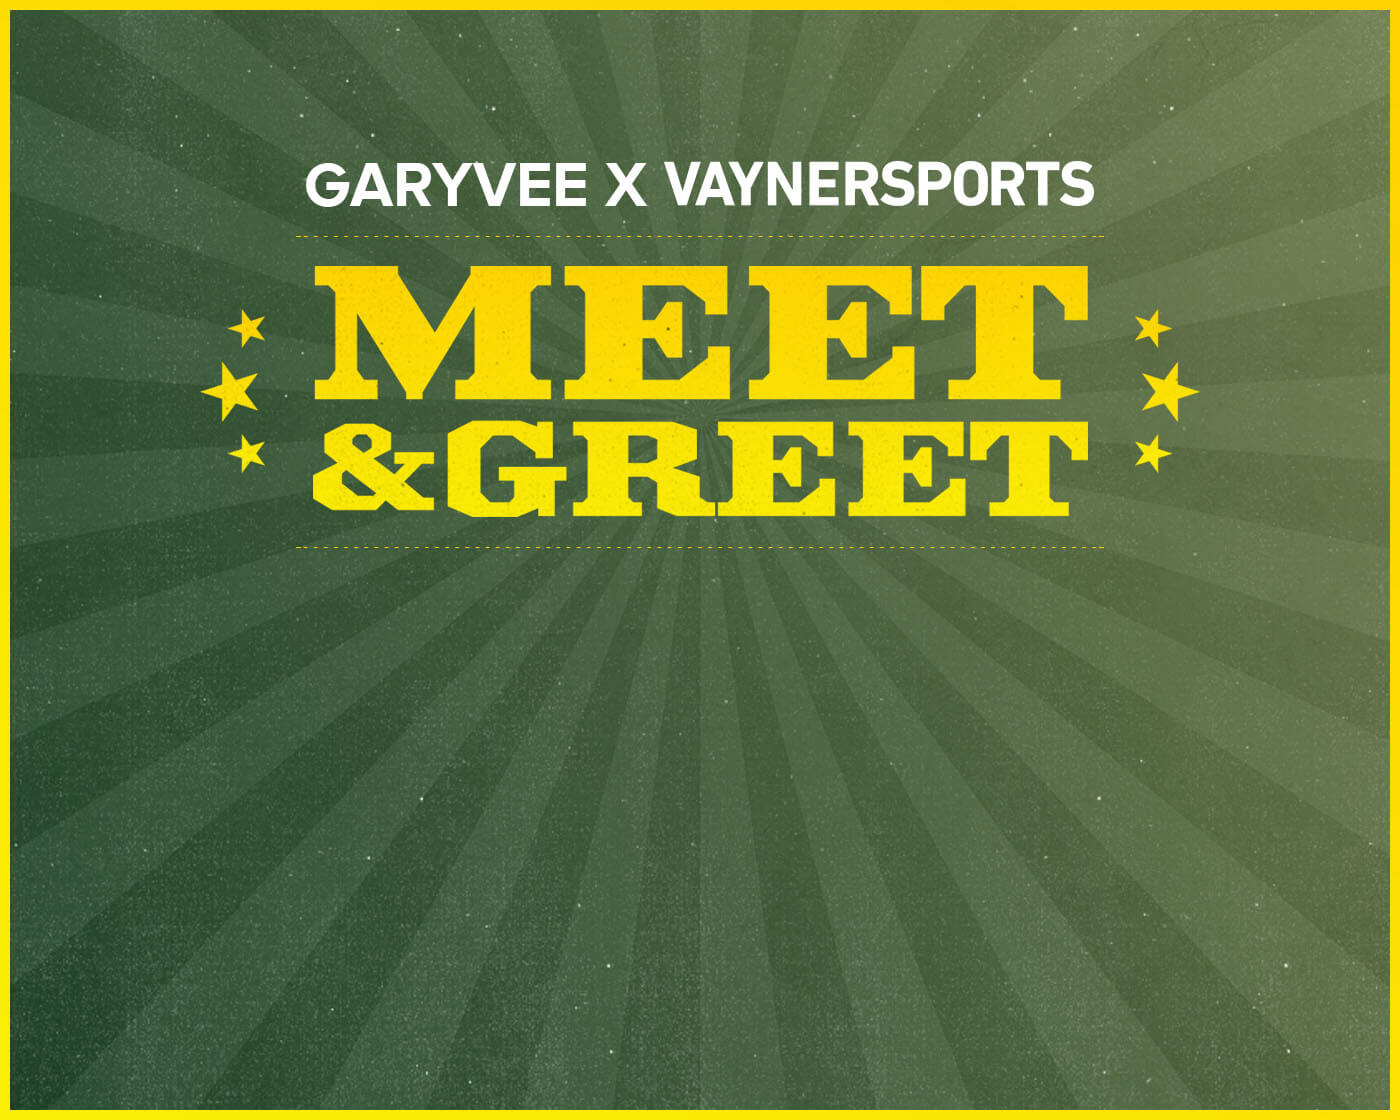 An Invitation to the GaryVee x VaynerSports Meet and Greet